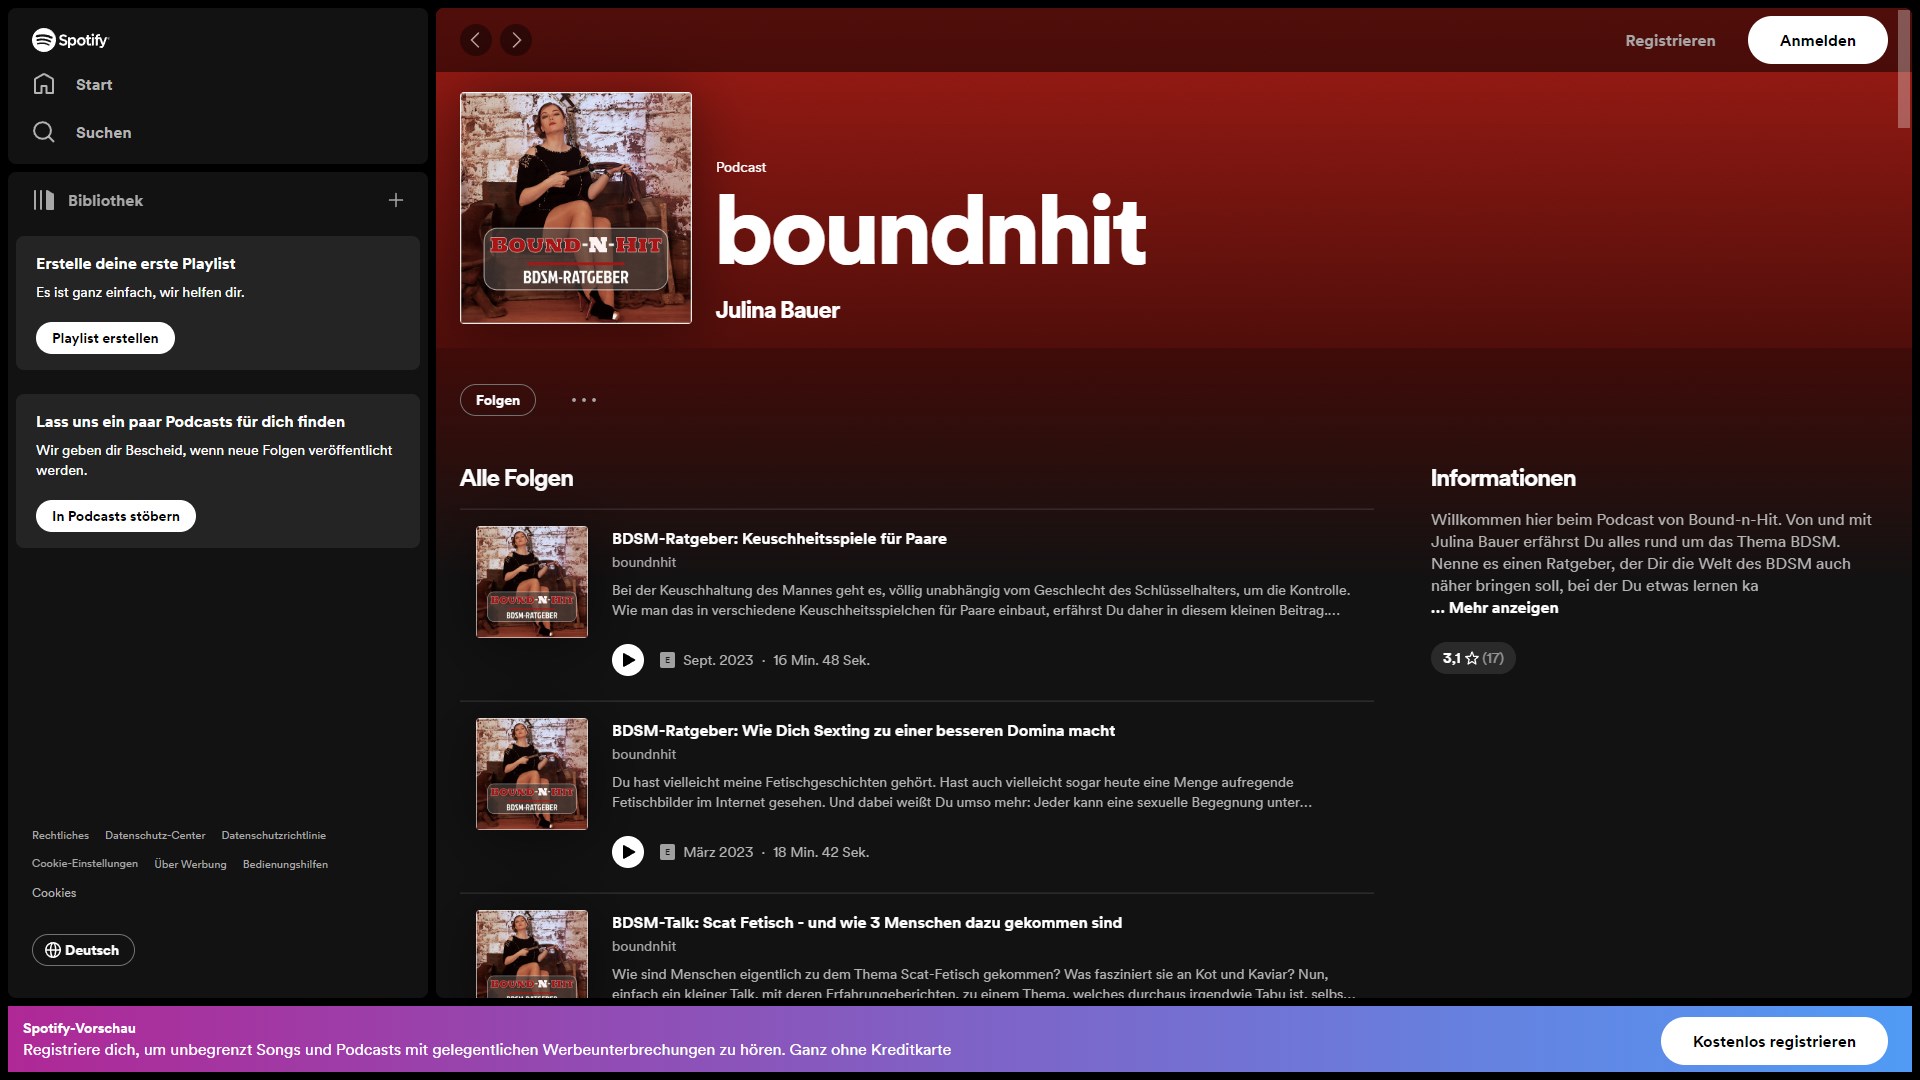 Boundnhit bei Spotify